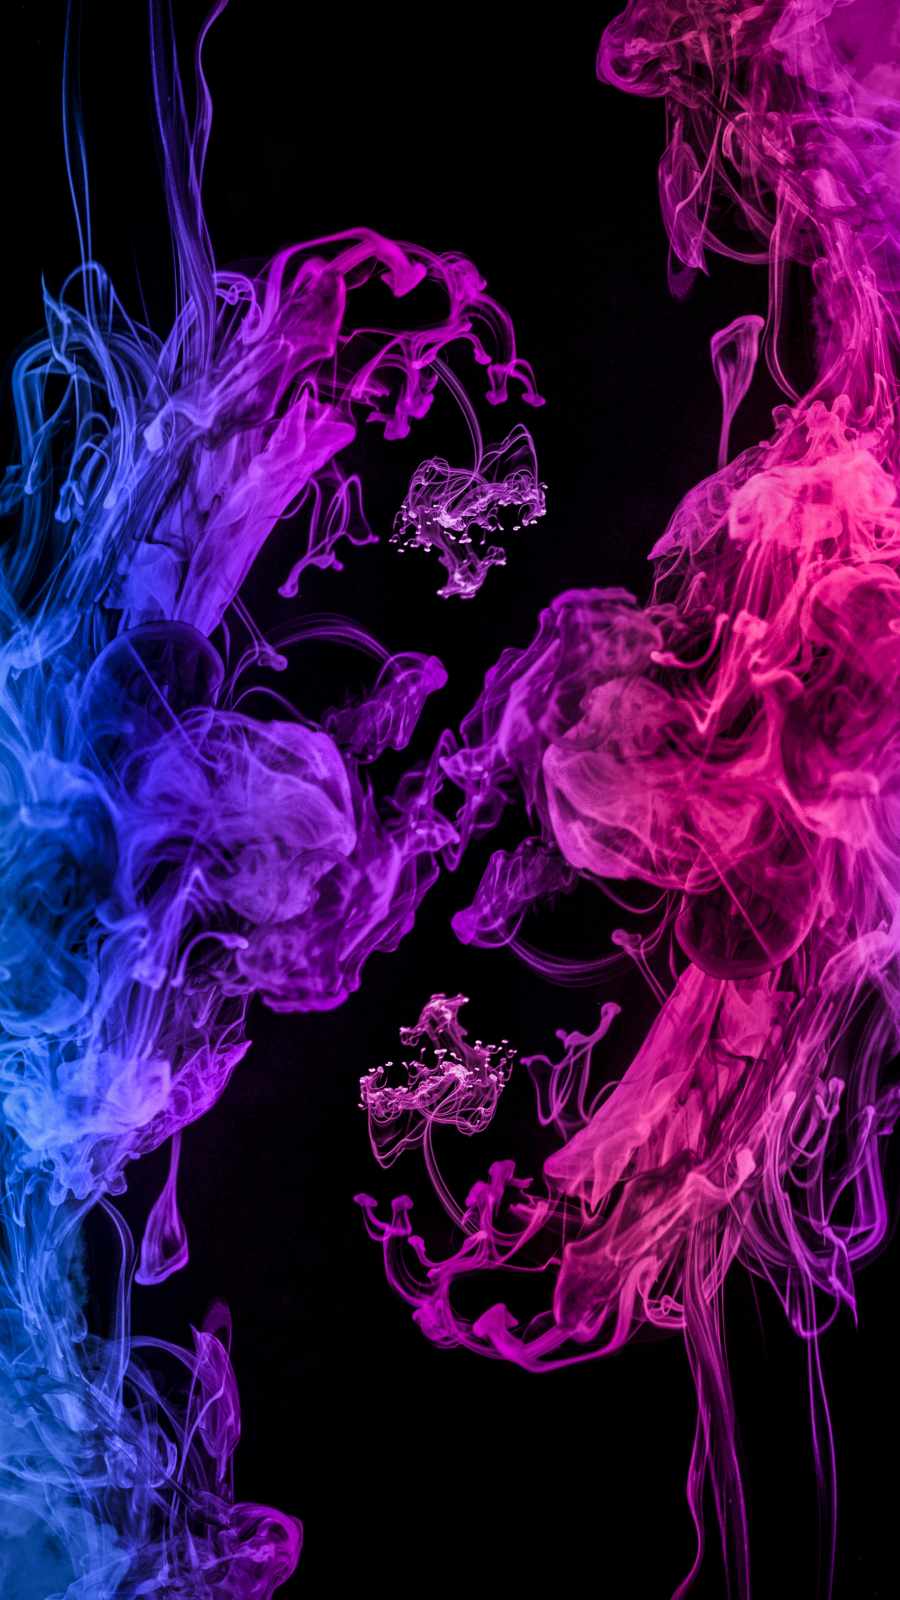 Color Smoke IPhone Wallpaper Wallpaper, iPhone Wallpaper